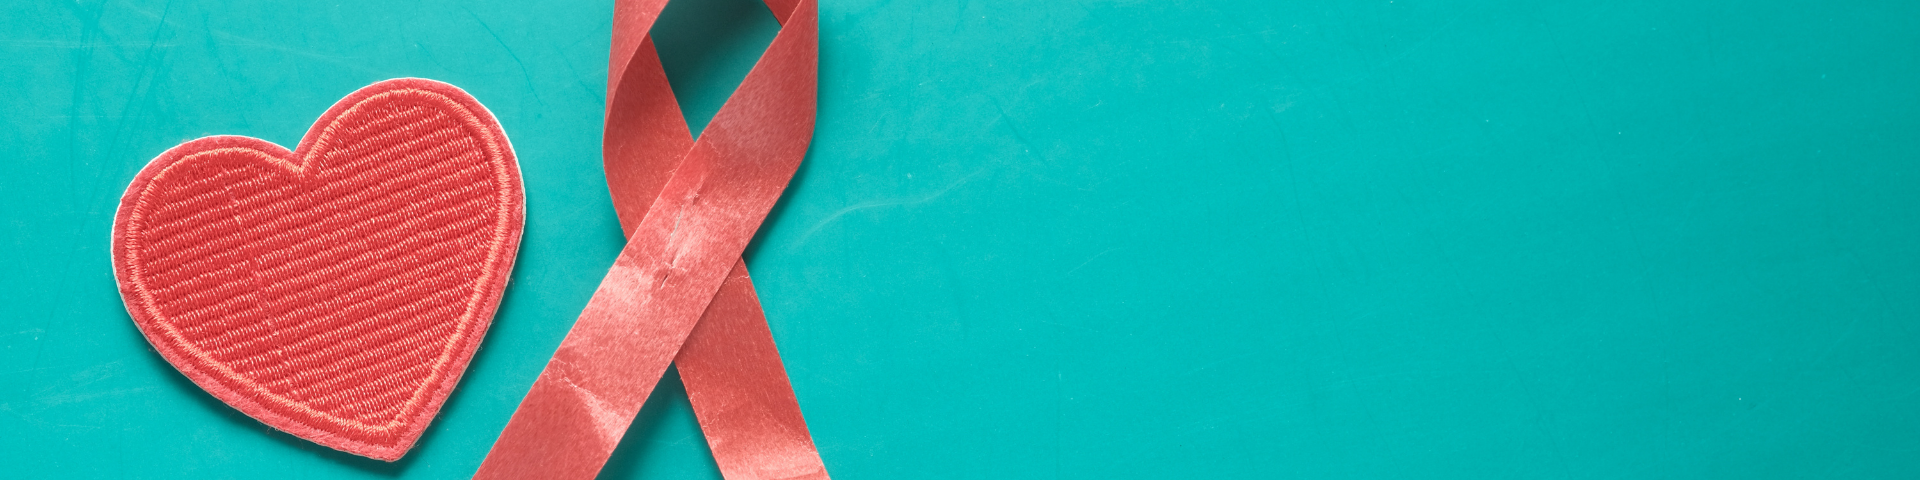 Mendidik Murid-Murd Tentang Virus HIV dan Penyakit AIDS  